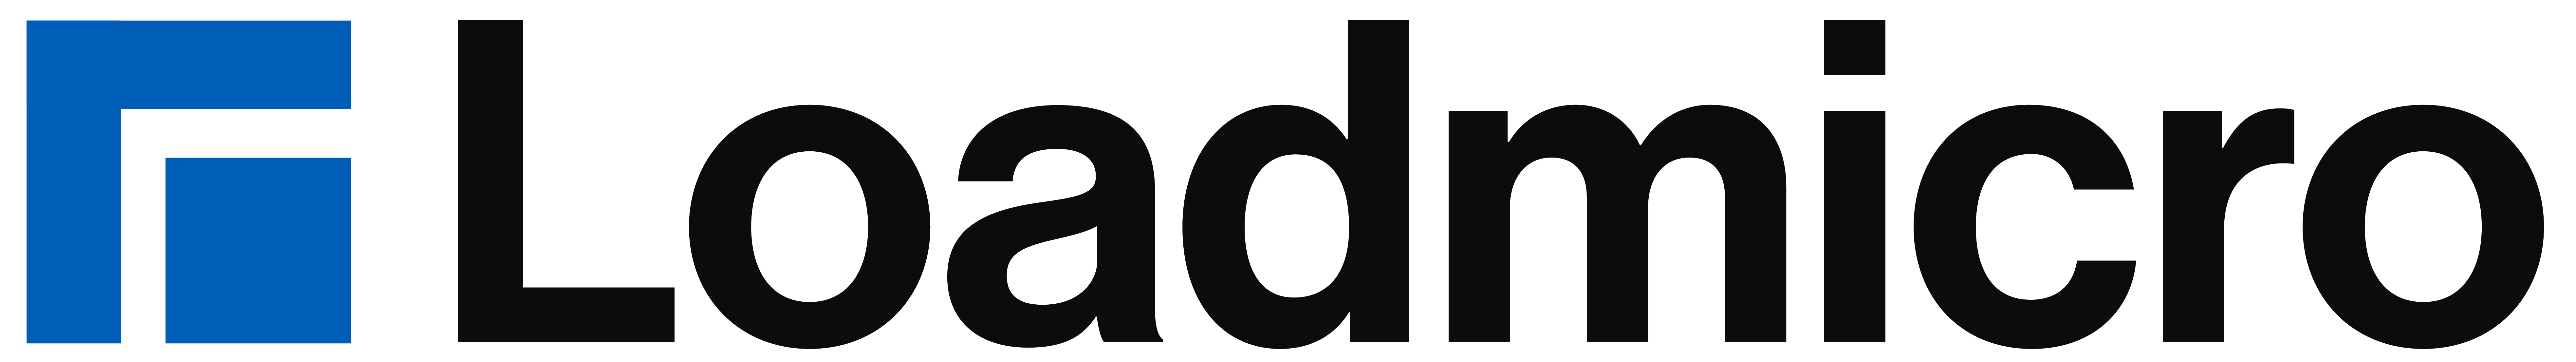 Loadmicro Logo